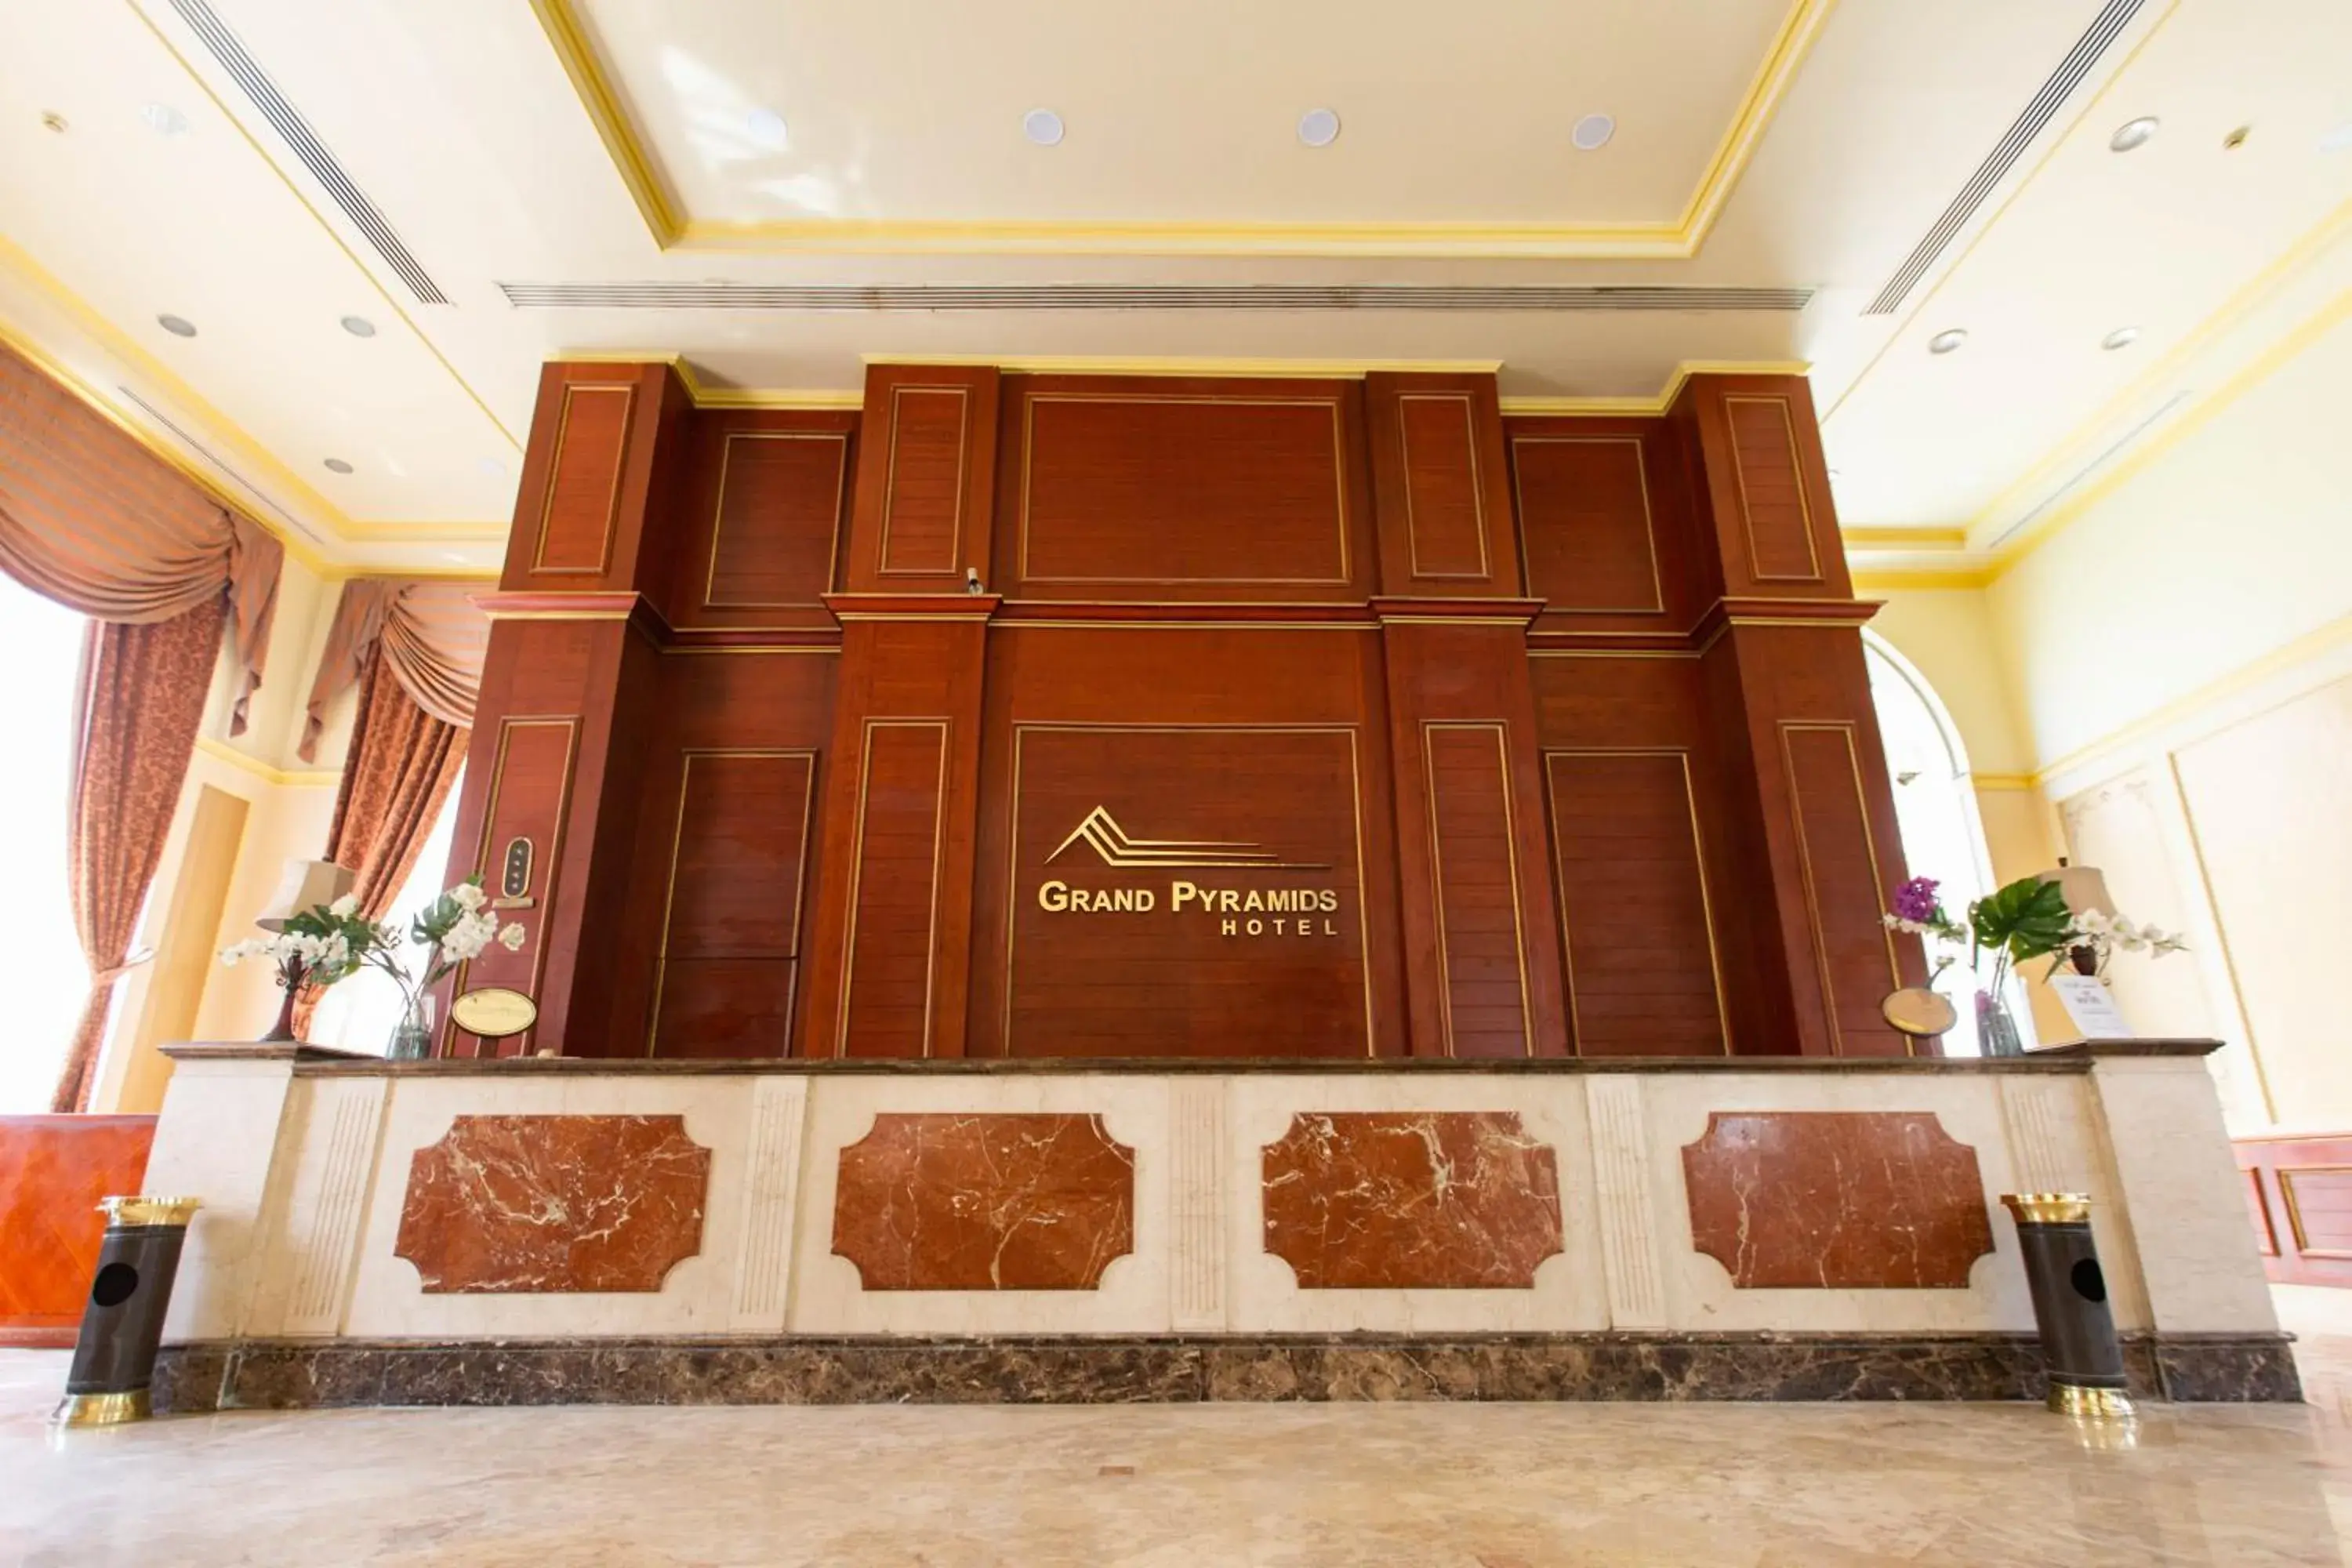 Lobby or reception in Grand Pyramids Hotel